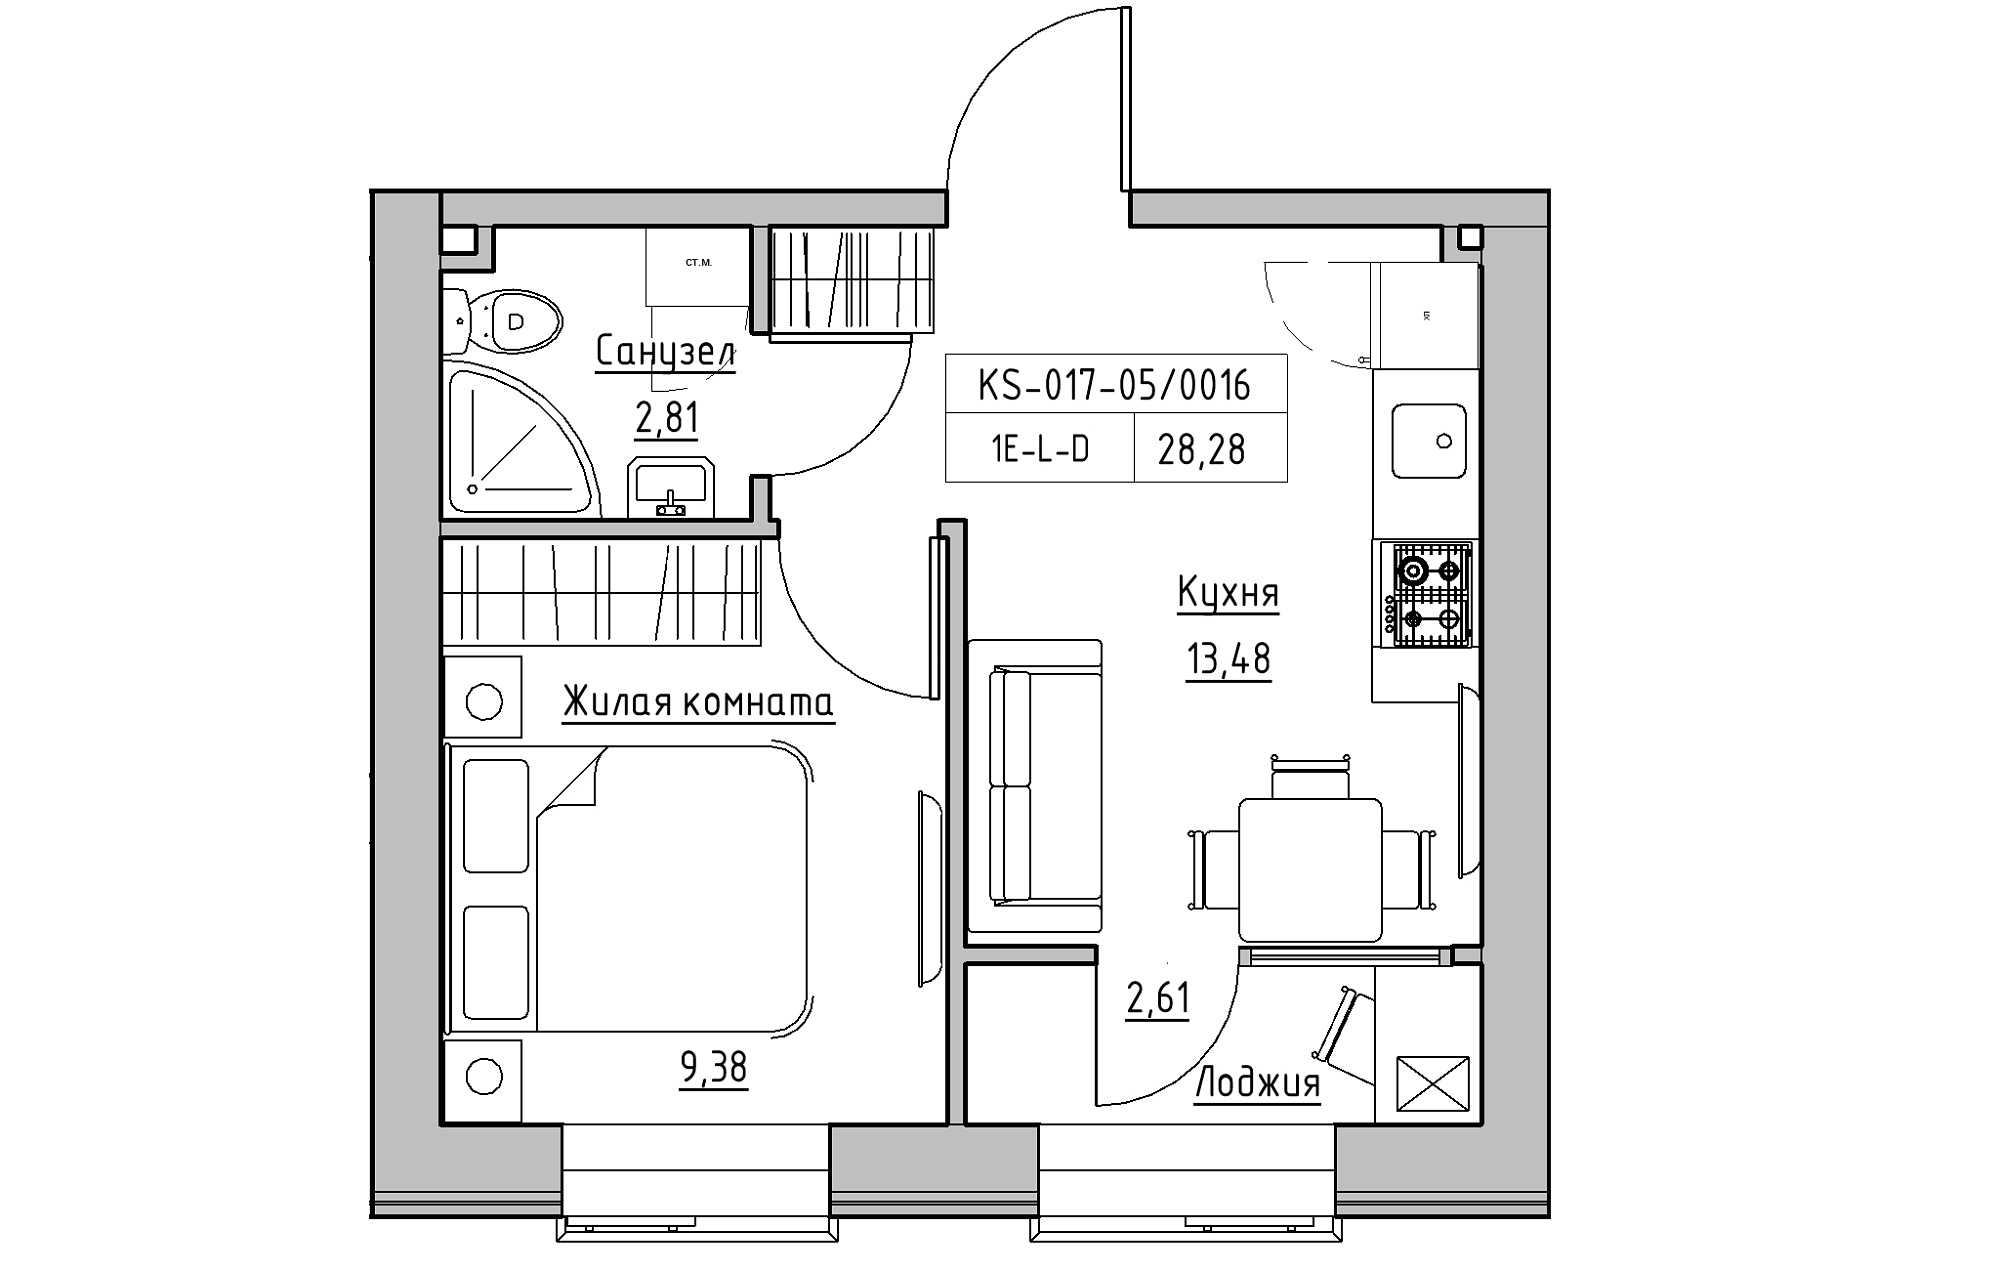 Planning 1-rm flats area 28.28m2, KS-017-05/0016.